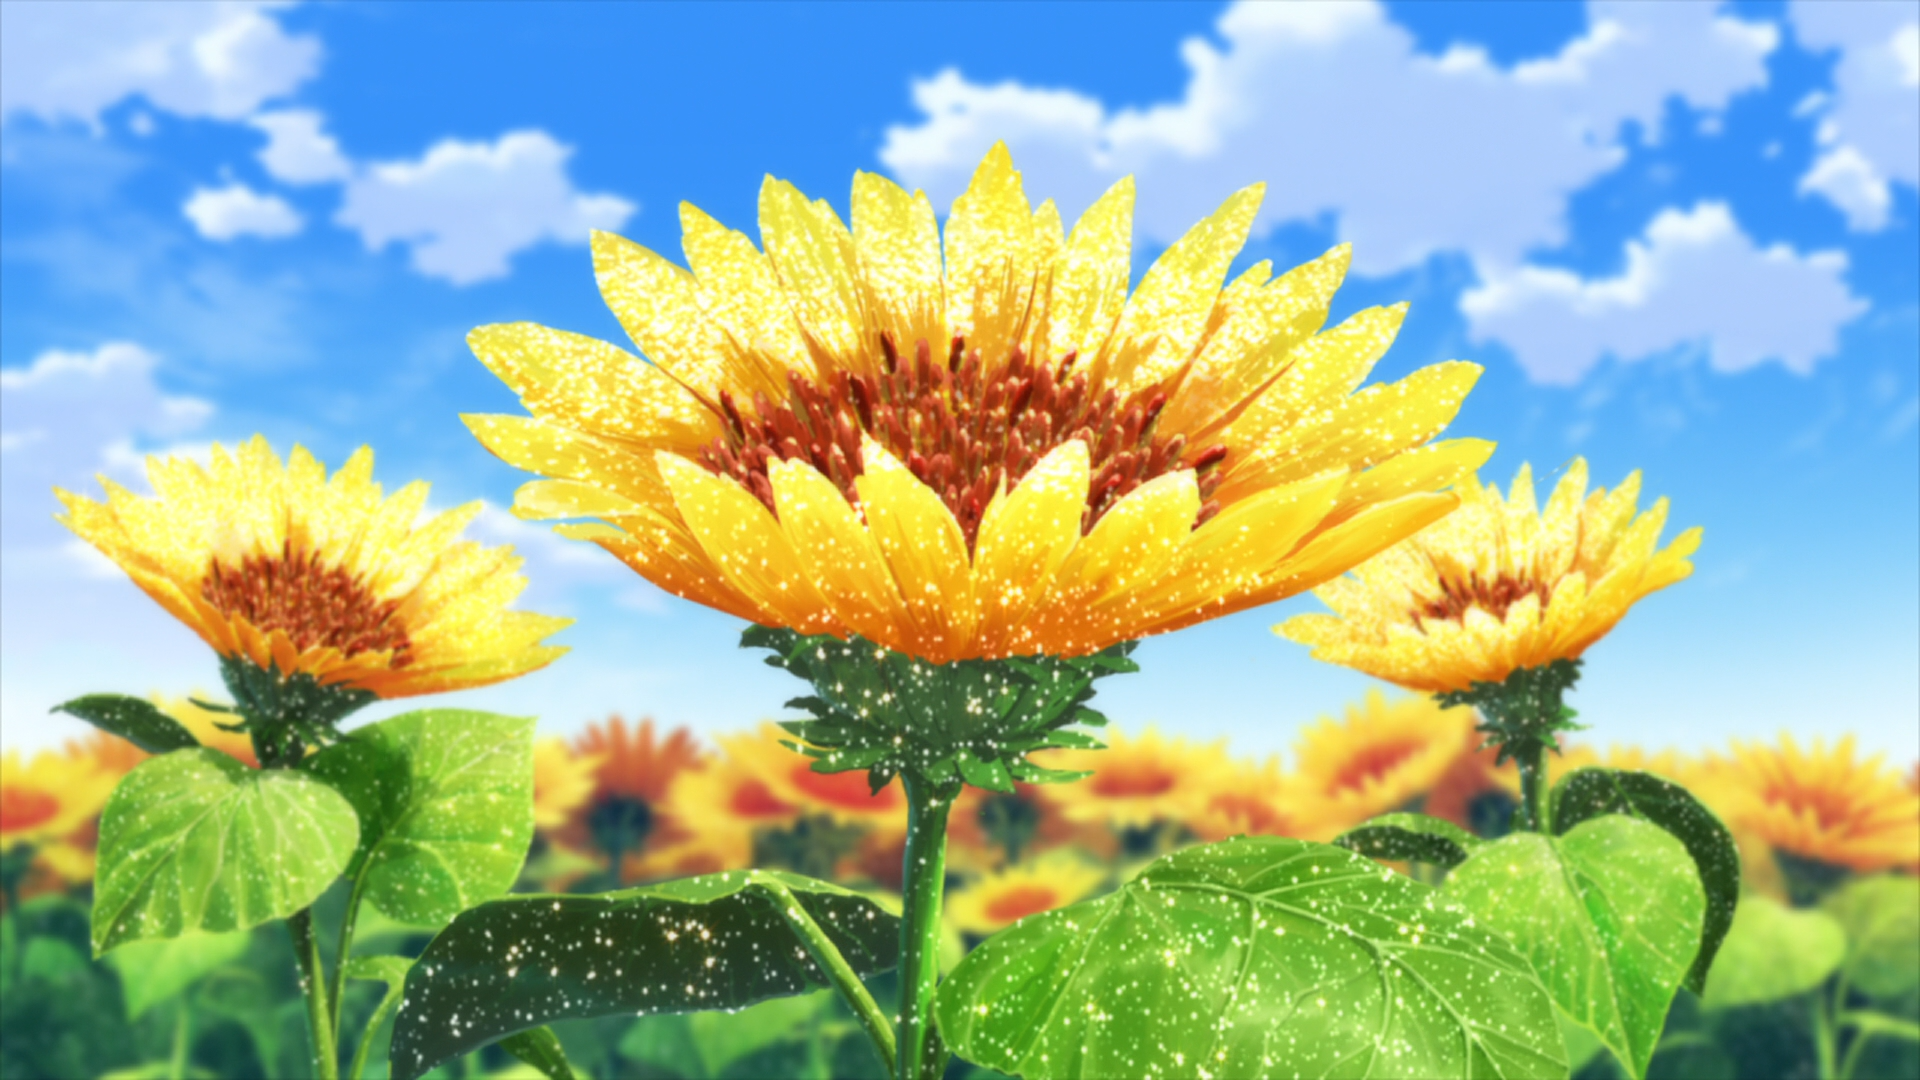 ArtStation - Sunflowers at sunrise